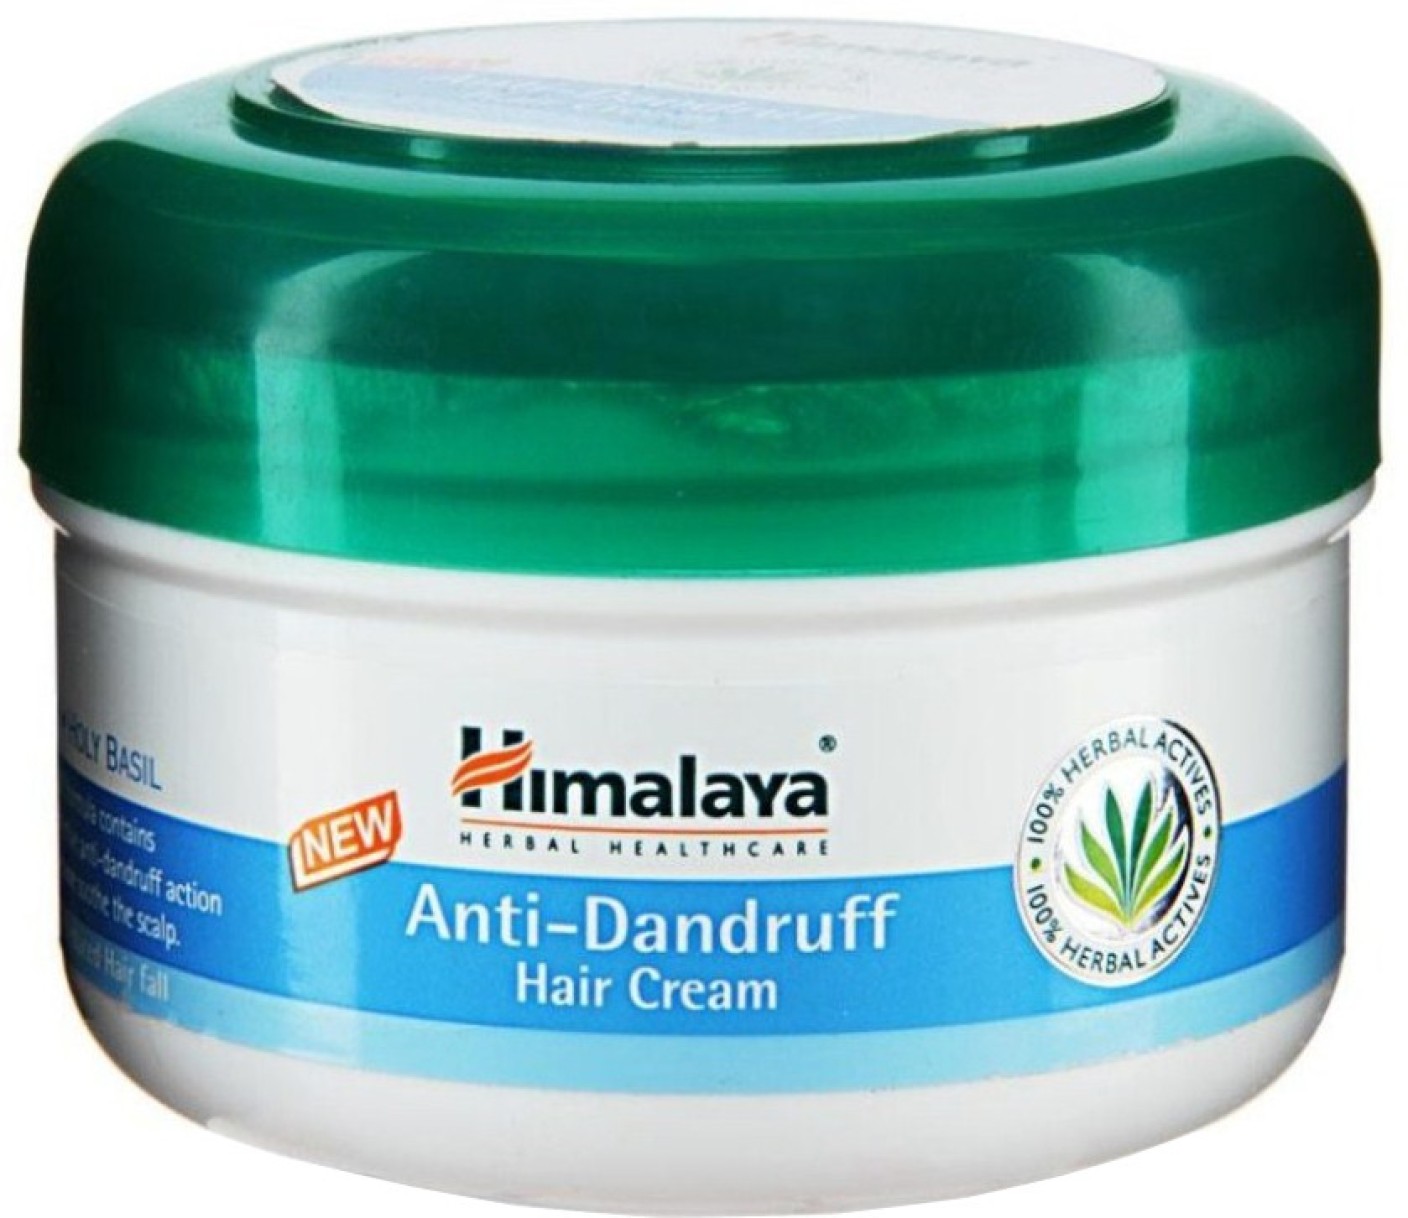 Review: Himalaya Anti Dandruff Hair Cream